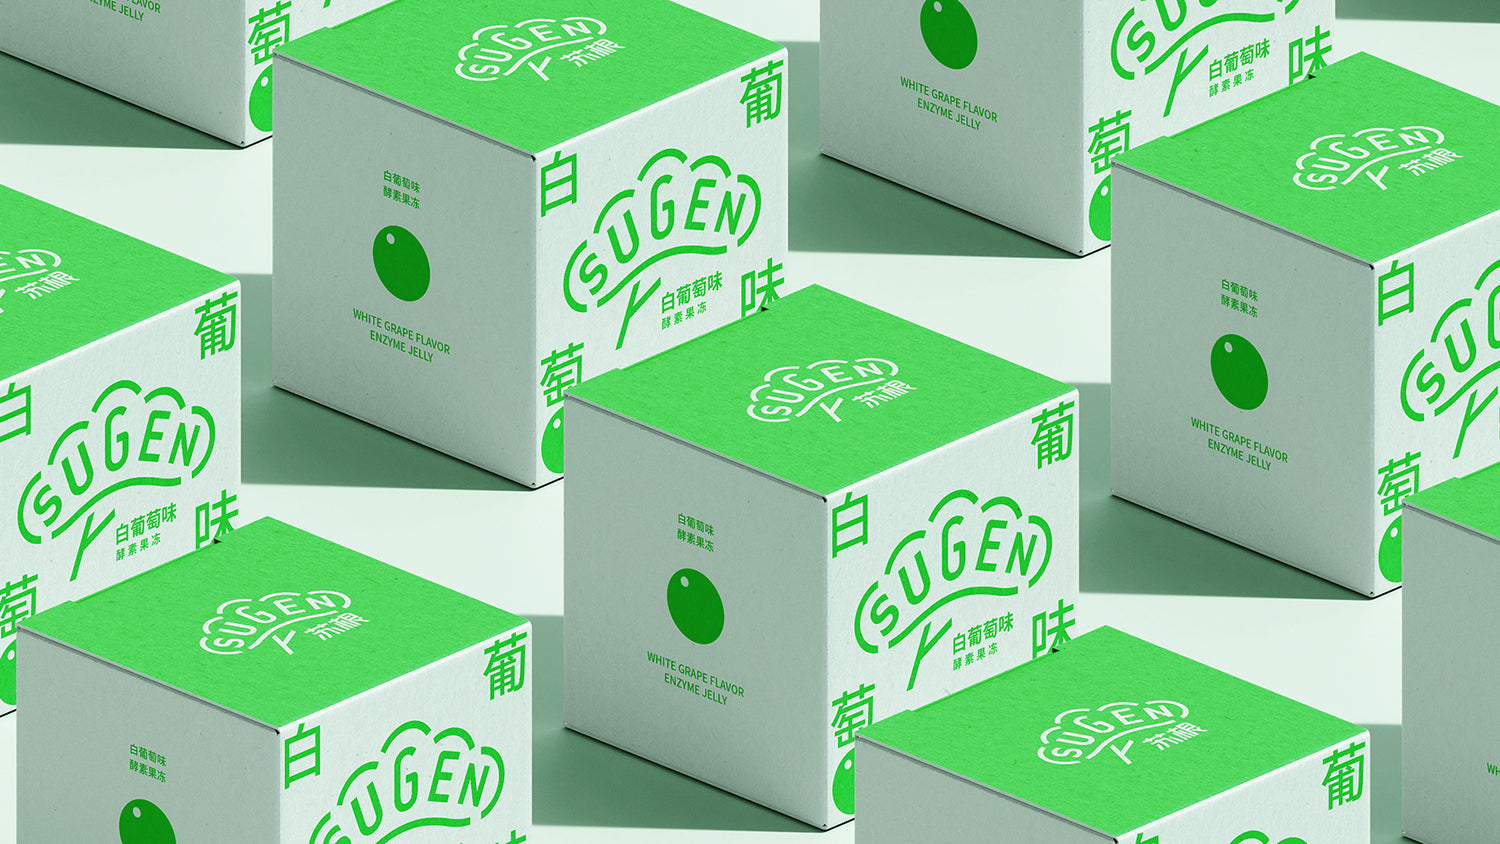 30 Exciting Healthy Food Packaging Designs